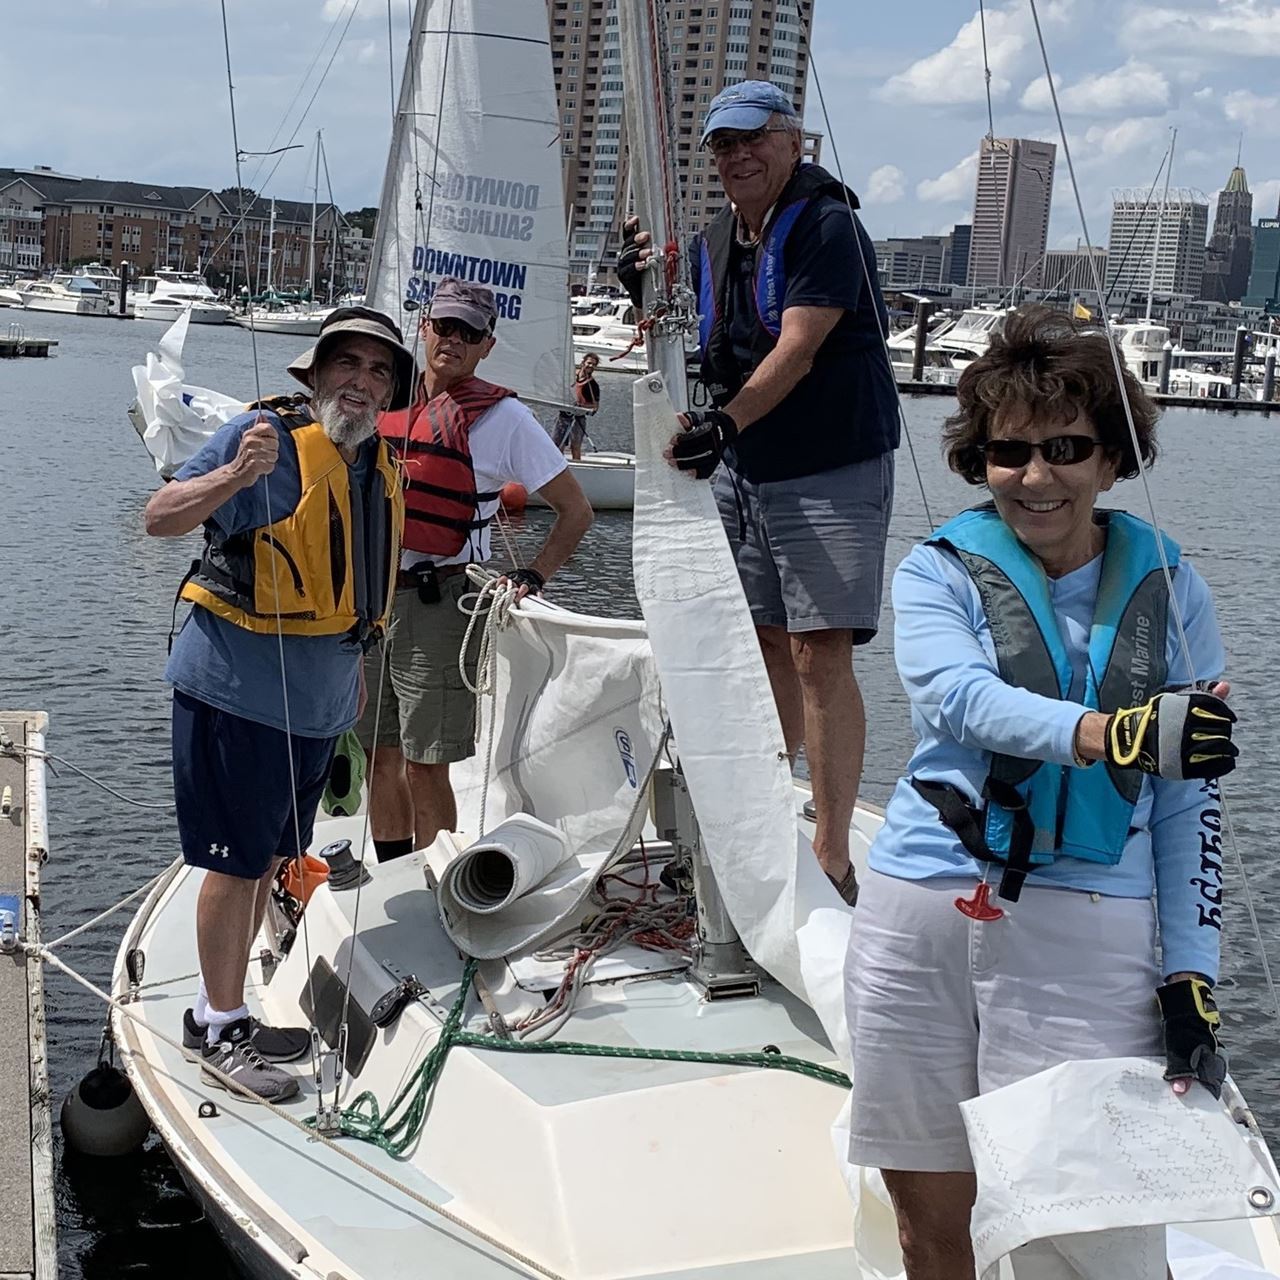 Members enjoy an afternoon sail